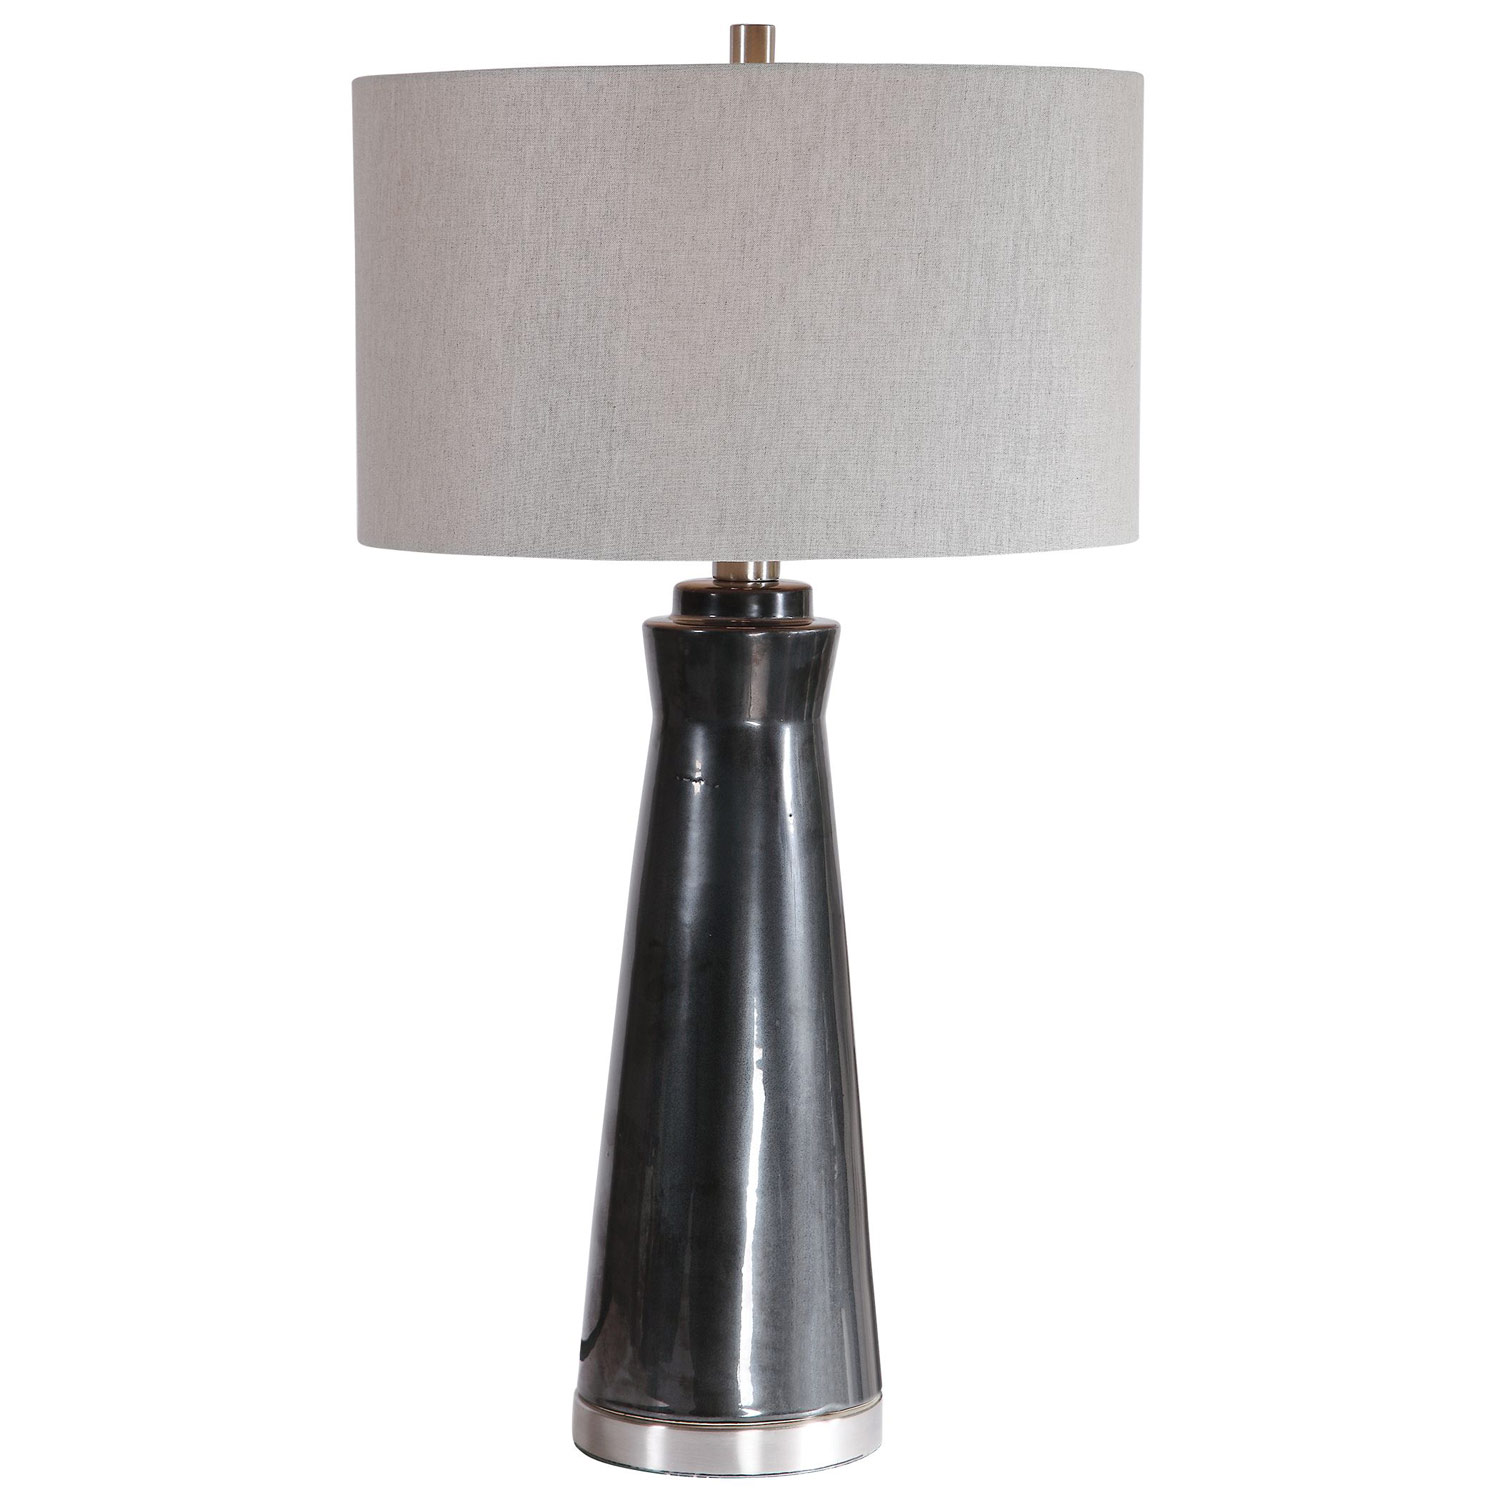 Uttermost Arlan Table Lamp - Dark Charcoal